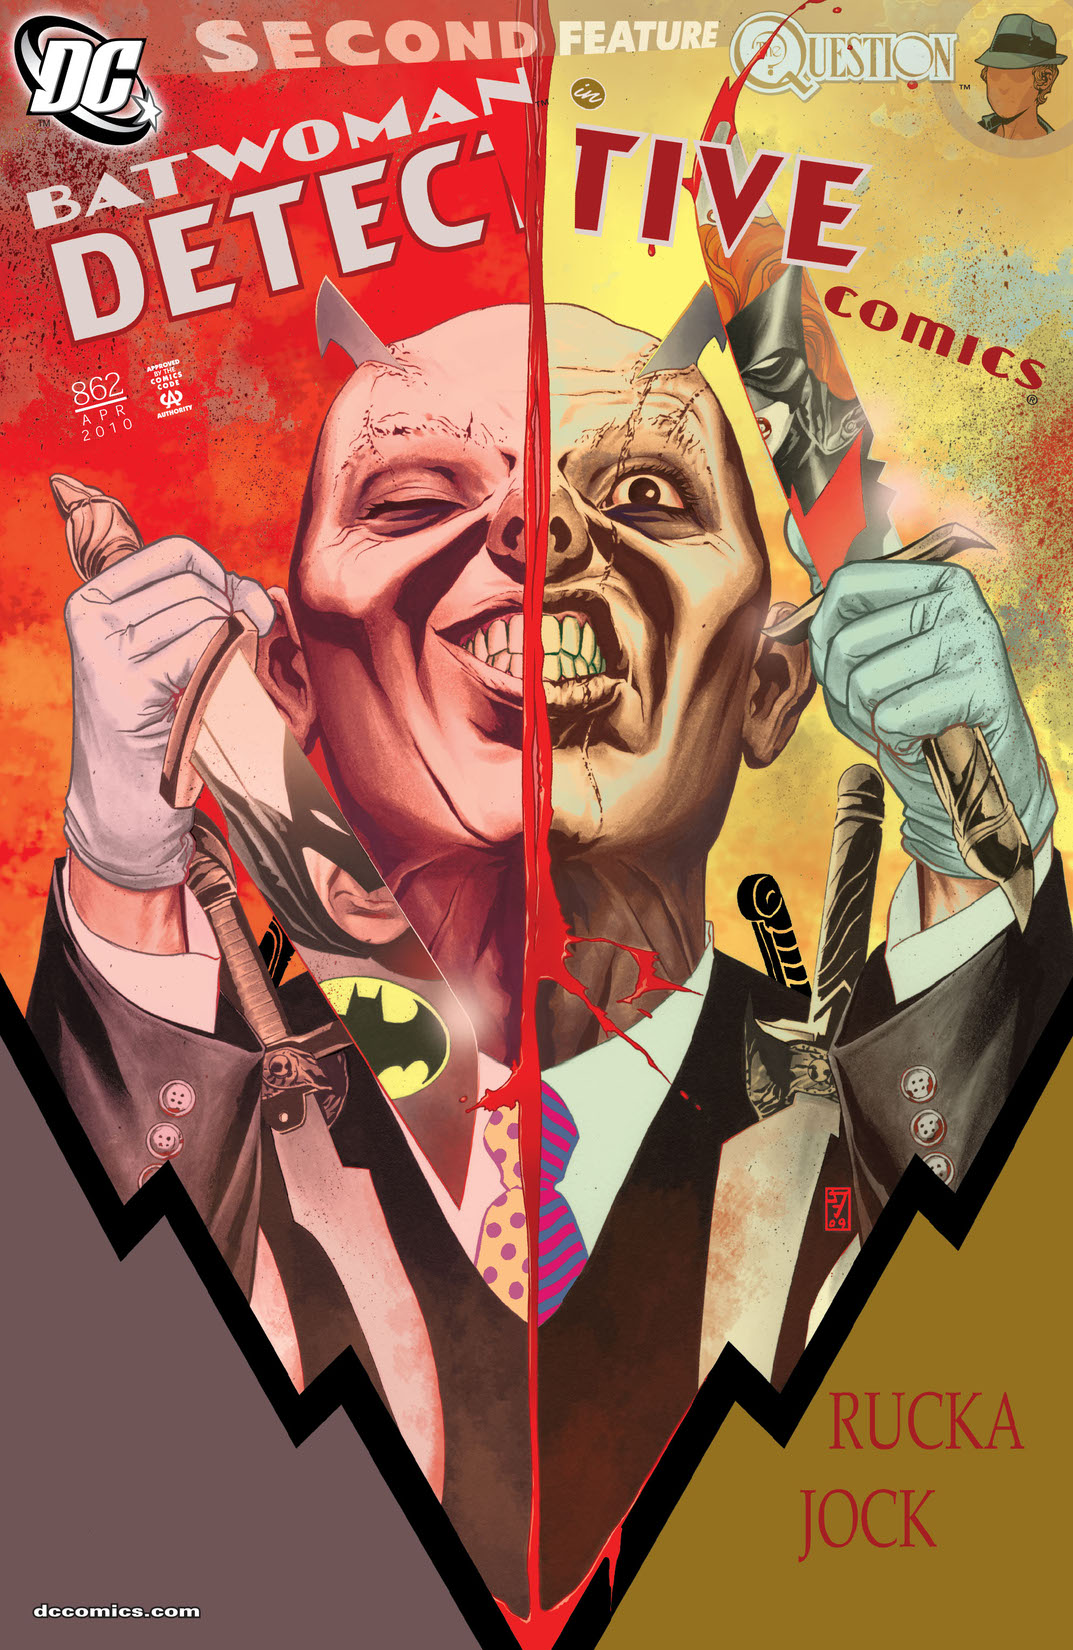 Detective Comics (1937-) #862 preview images